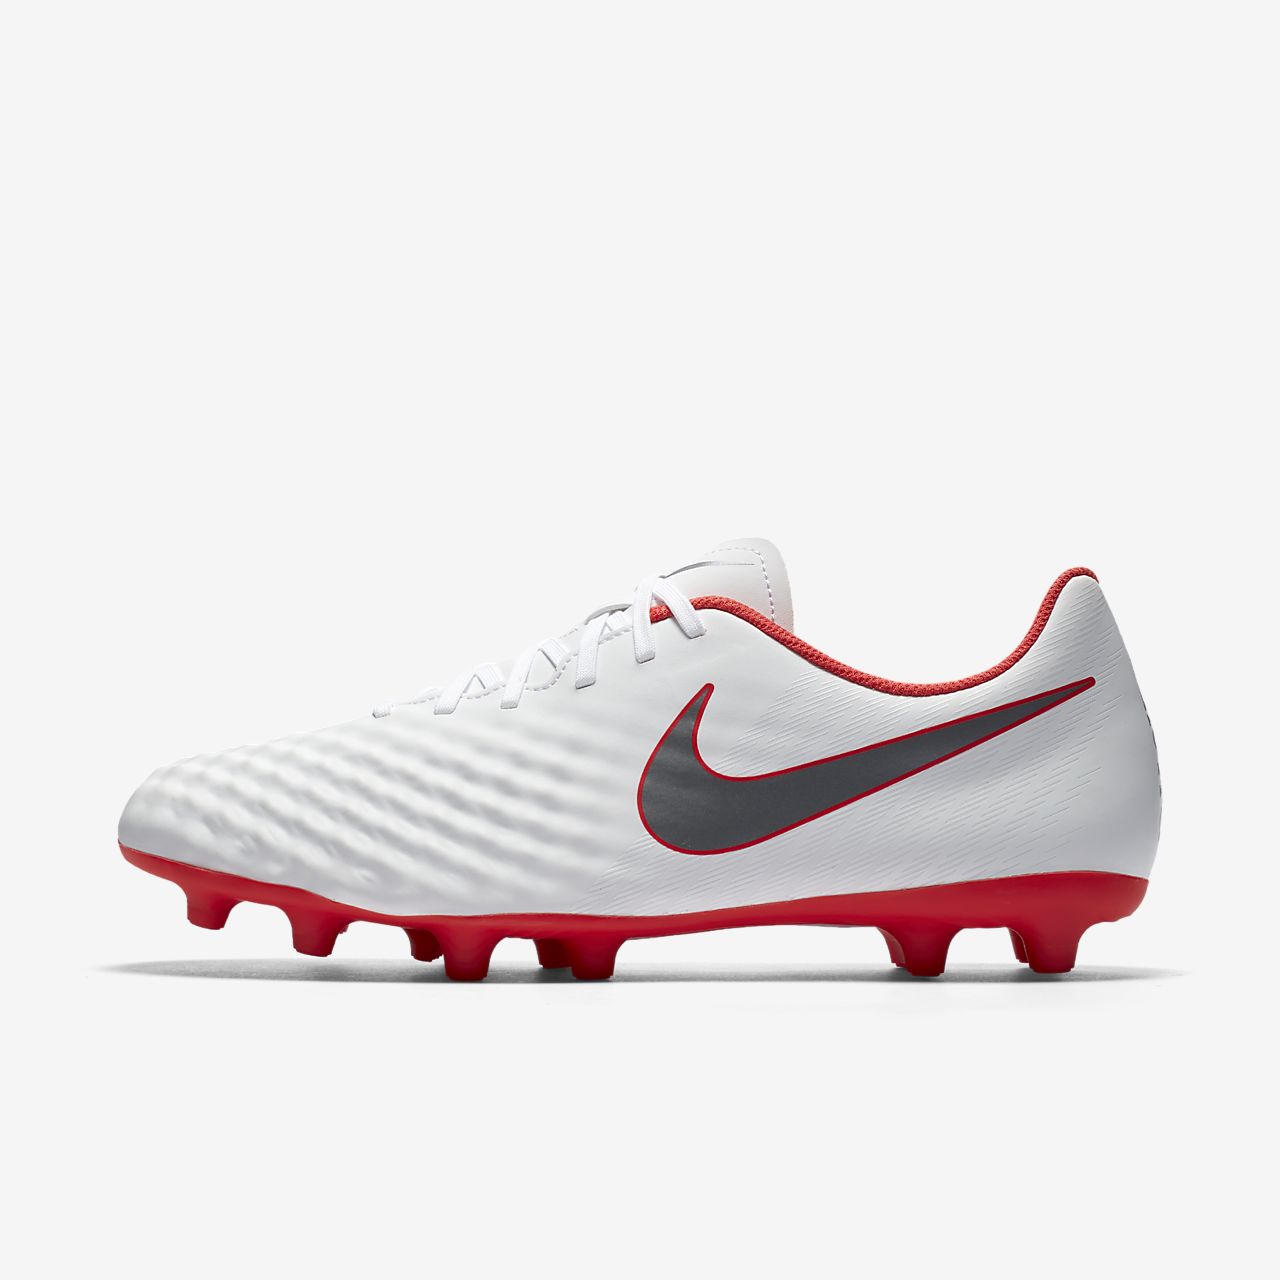 Nike Magista Obra II 2 Pro FG Soccer Cleats Size 11 Mens